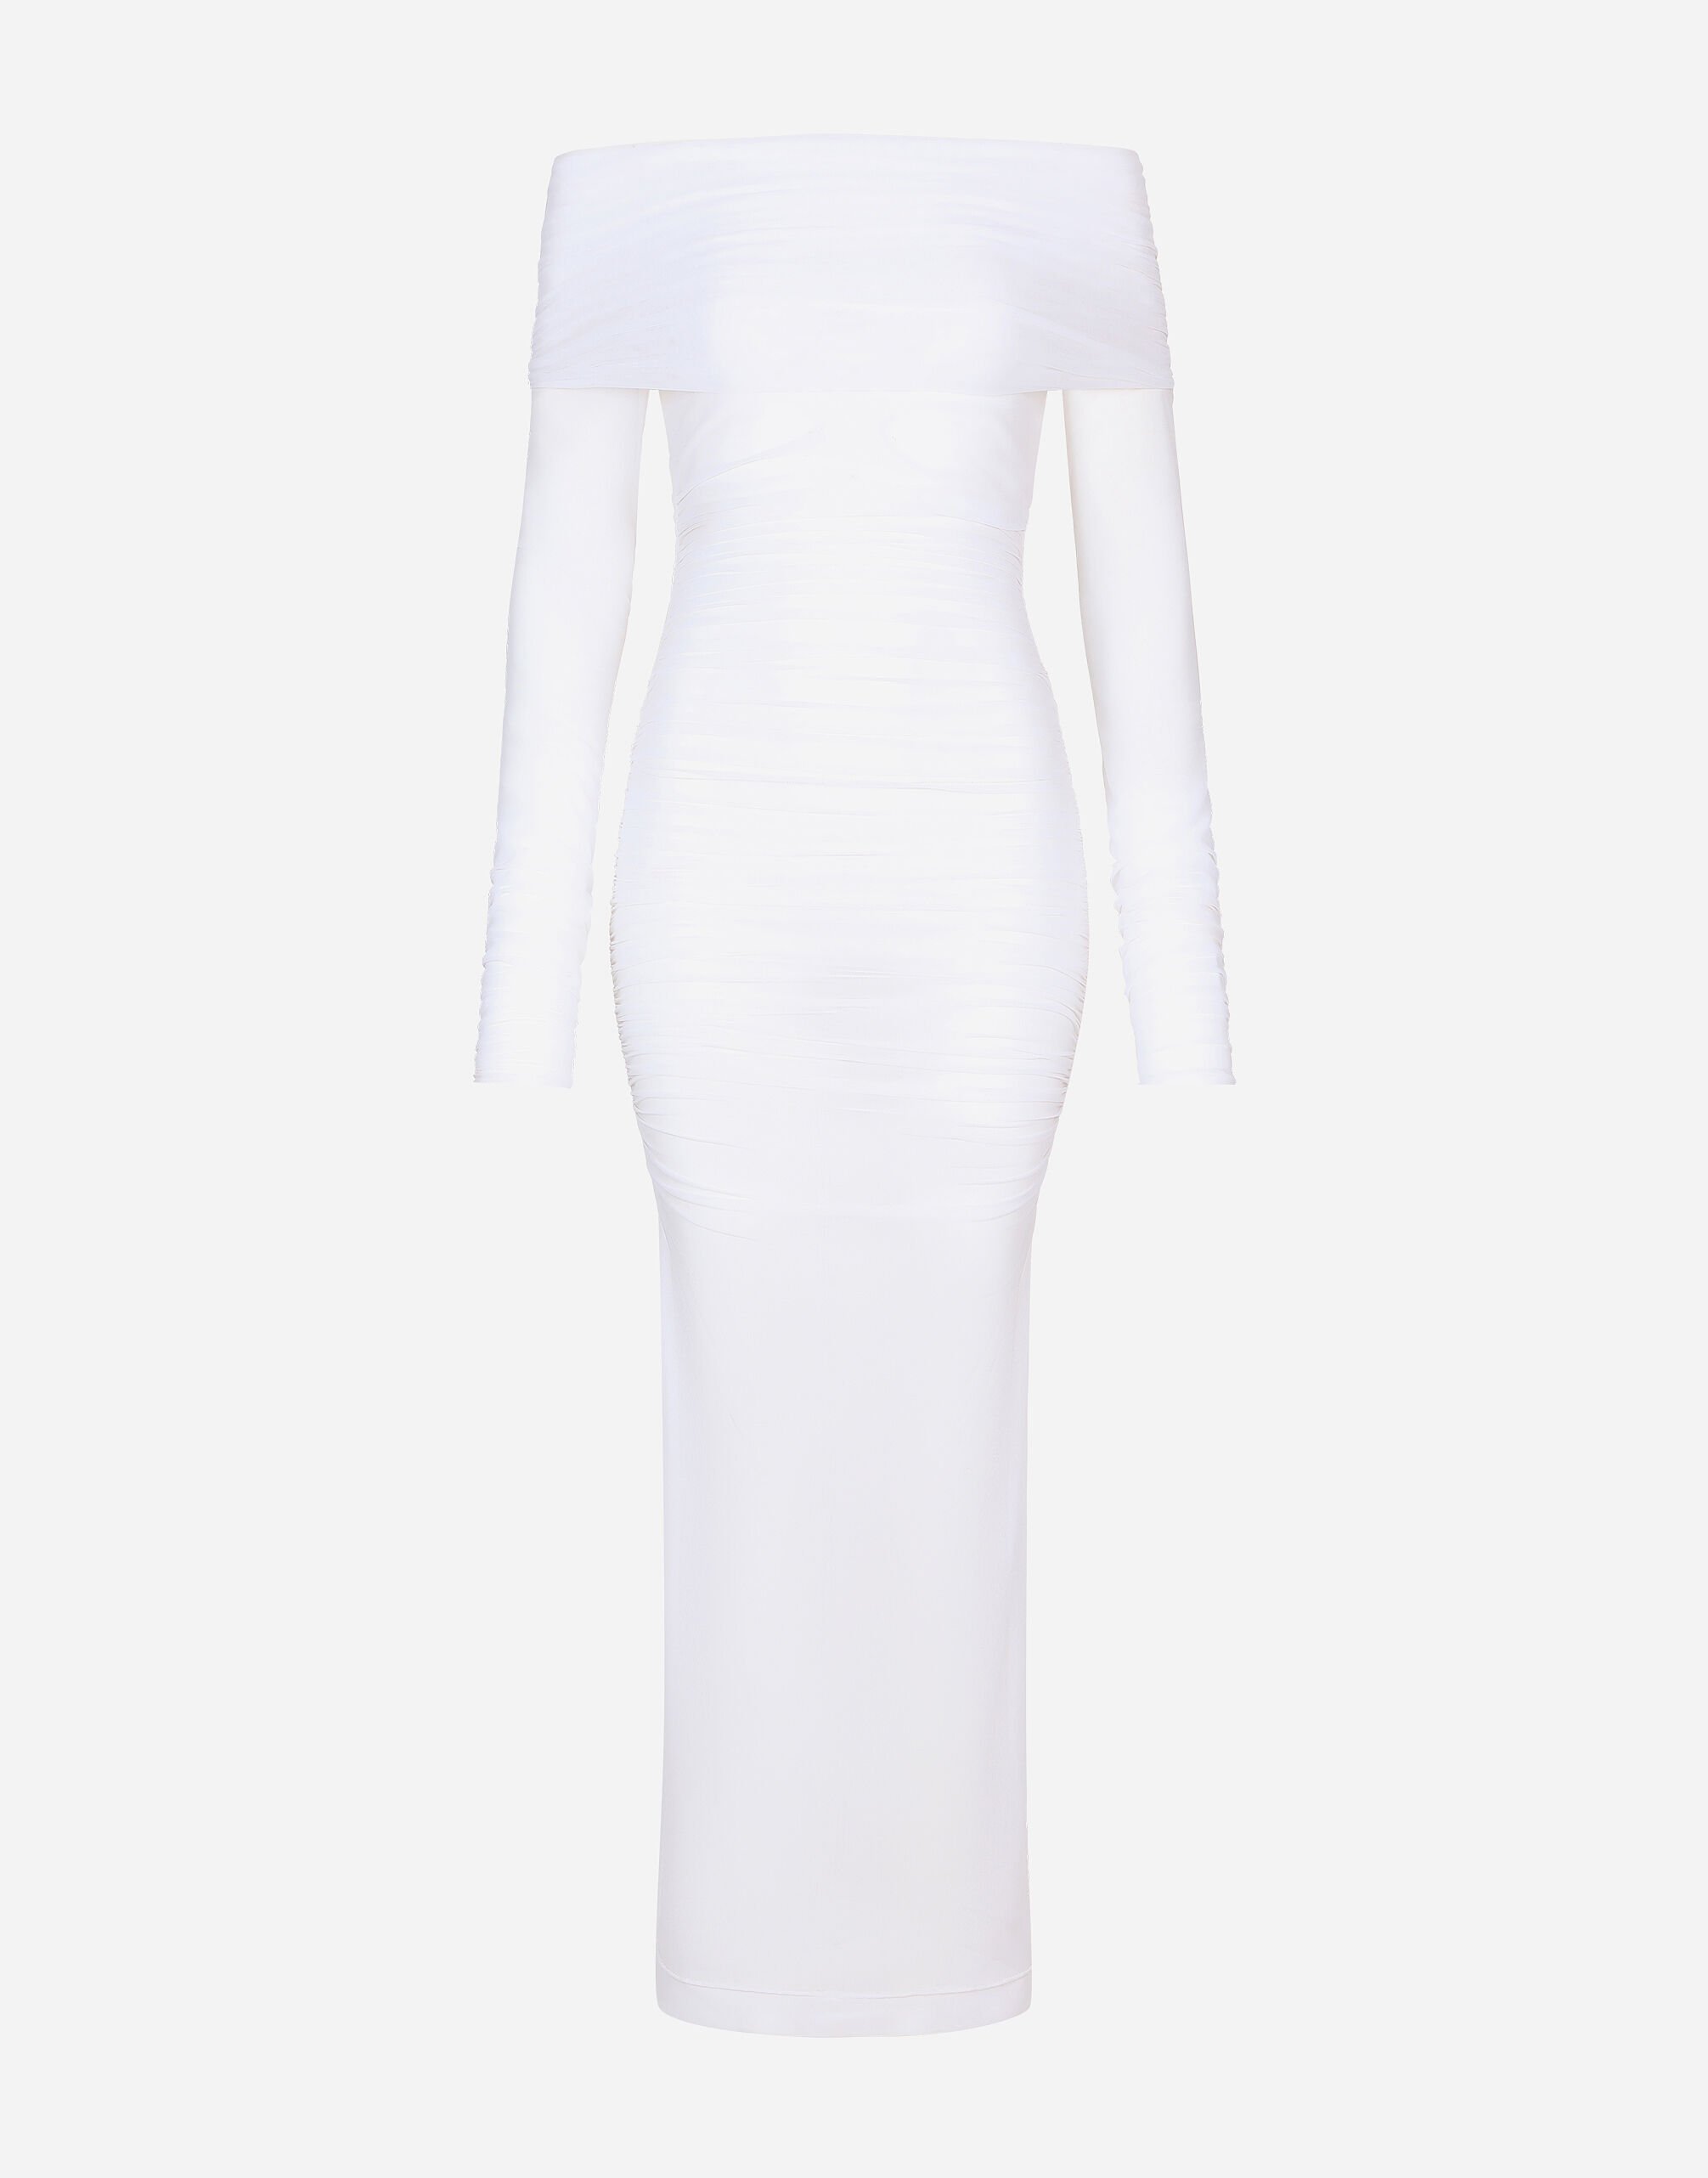 Dolce & Gabbana KIM DOLCE&GABBANAفستان تول بطول للربلة أسود VG6187VN187